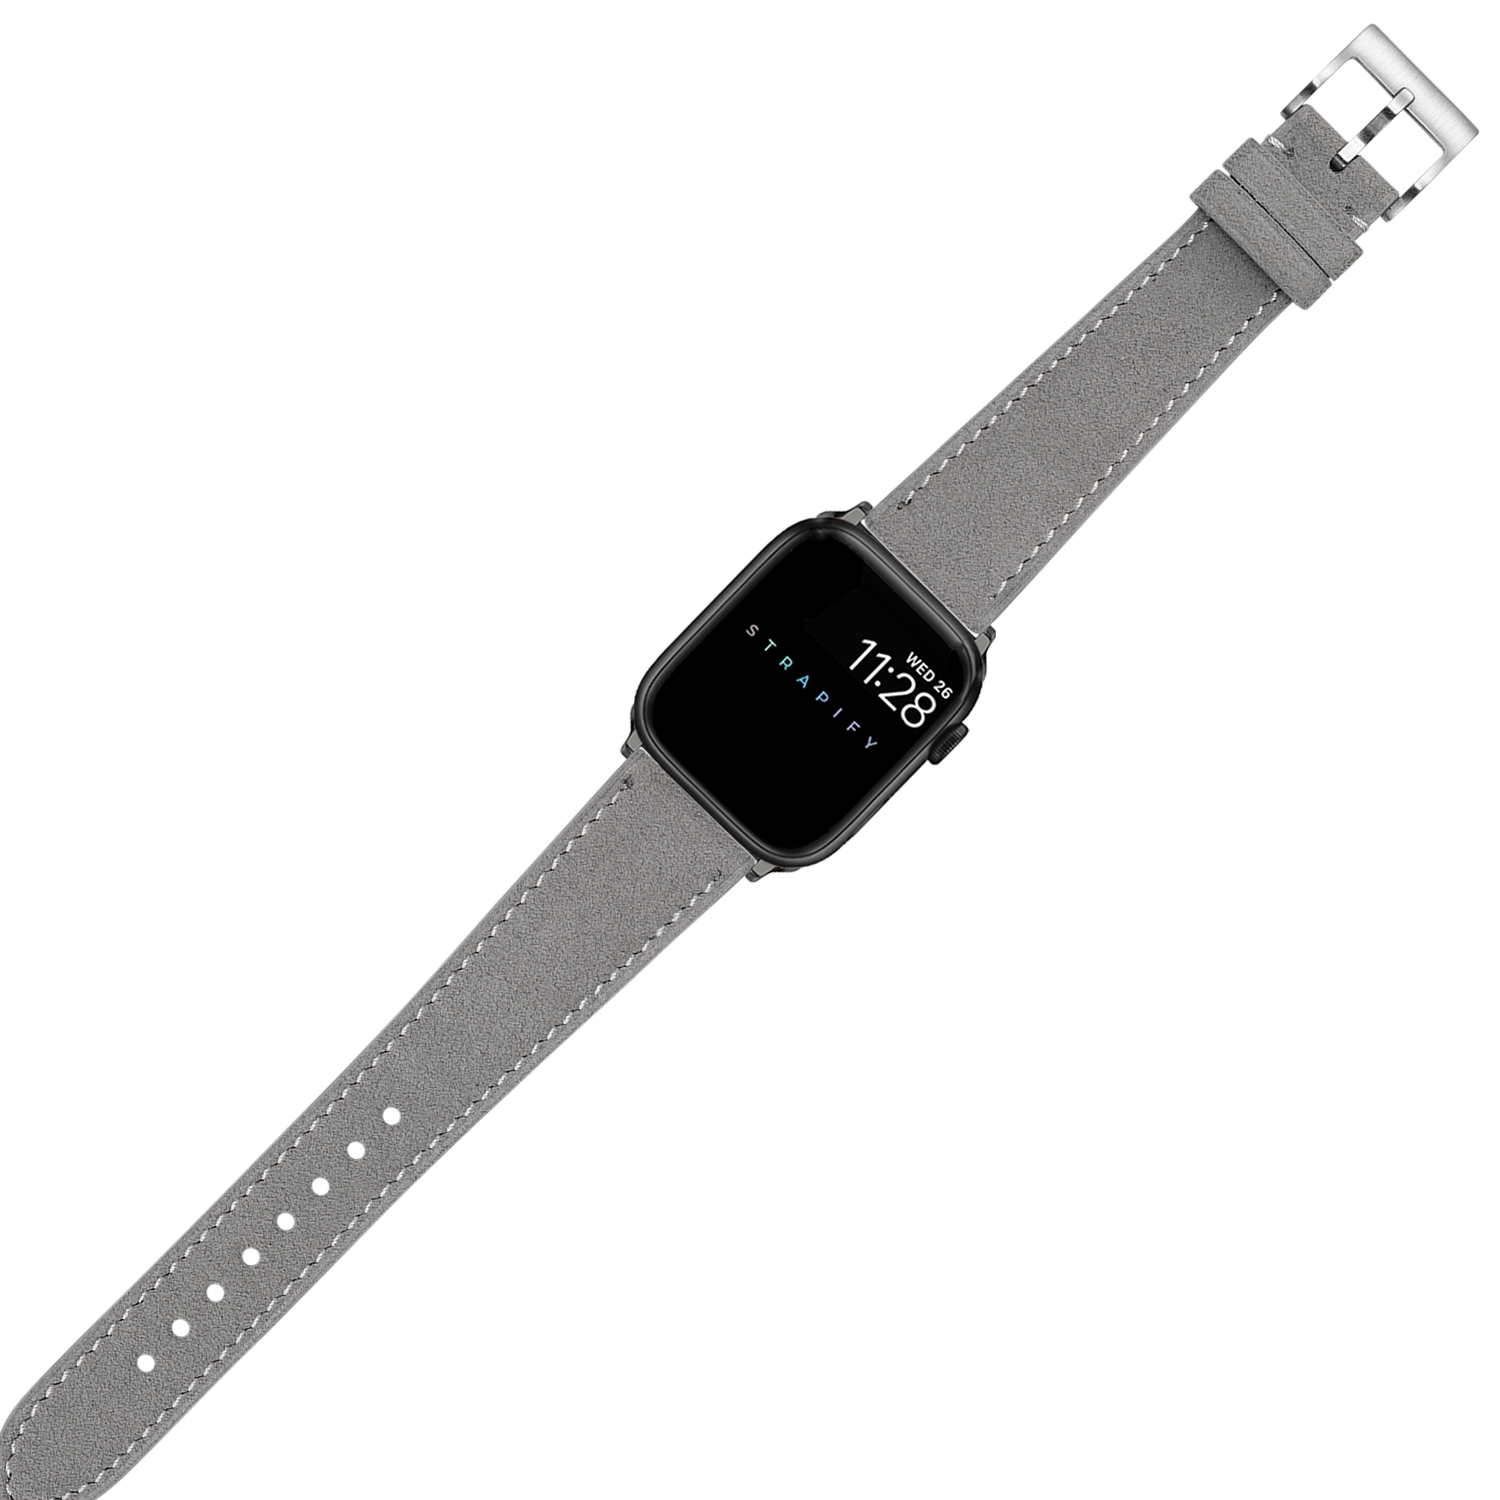 [Apple Watch] Alcantara Leather - Grey | White Stitching